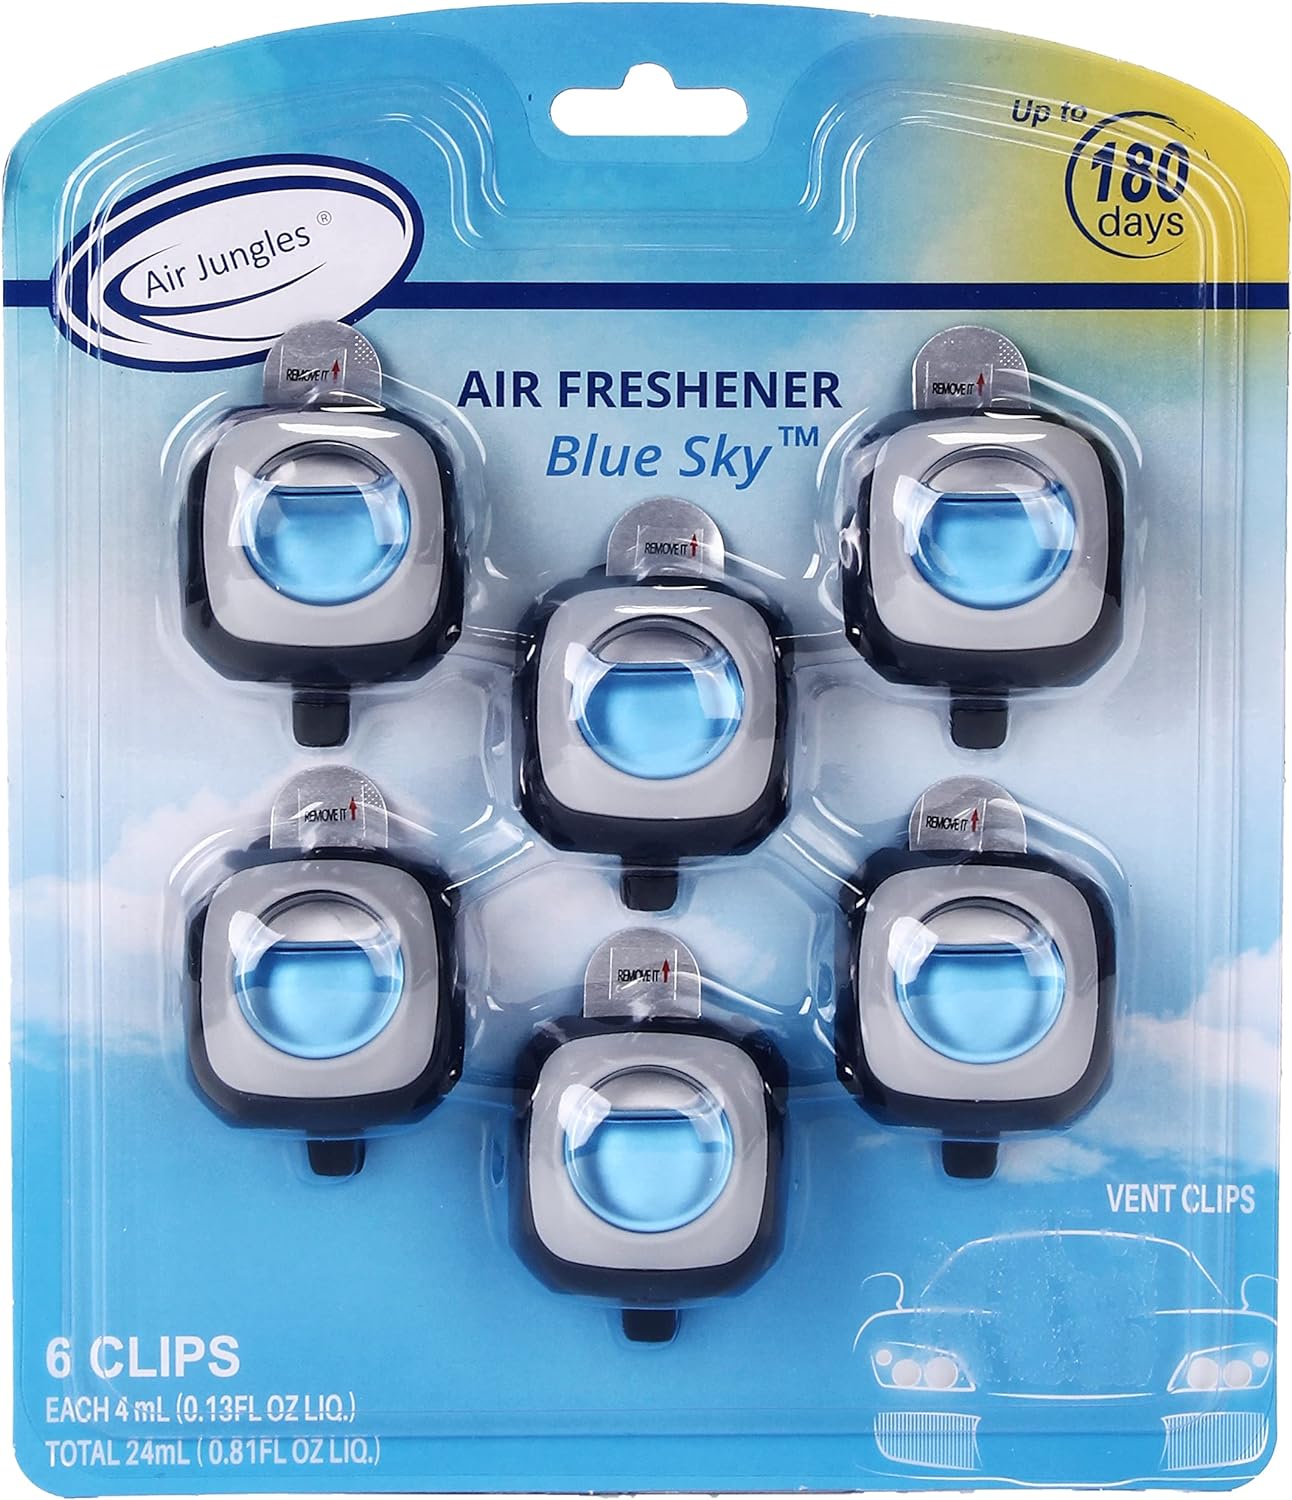 Air Jungles New Car Scent Car Air Freshener Clip(Blue Sky), 6 Car Freshener Vent Clips, 4ml Each, Long Lasting Air Freshener for Car, Up to